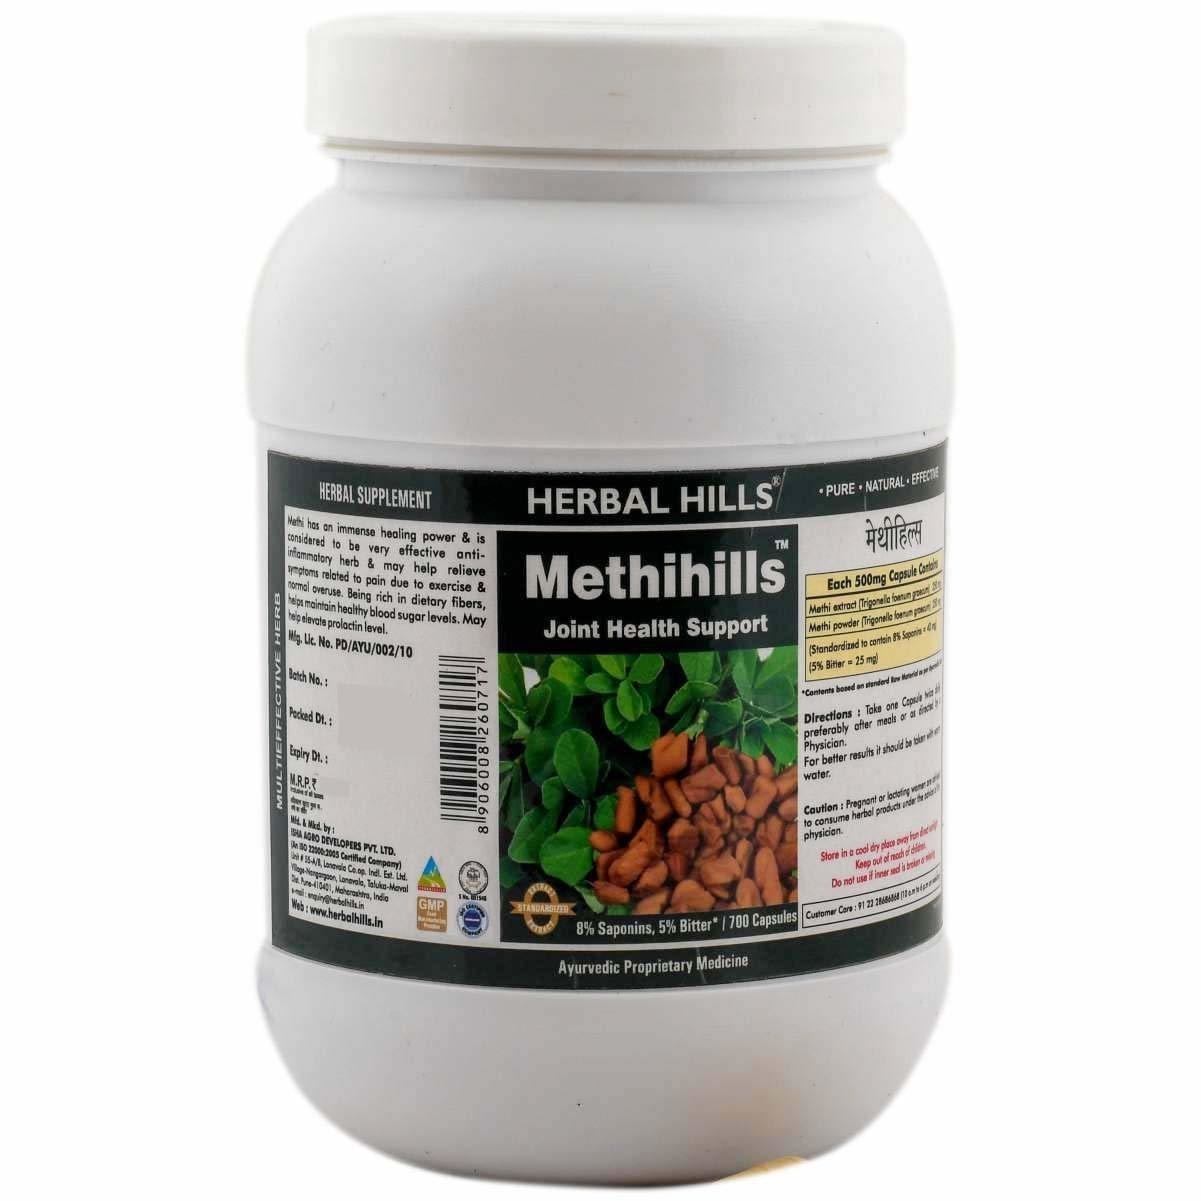 Herbal Hills Methihills 700 Capsules